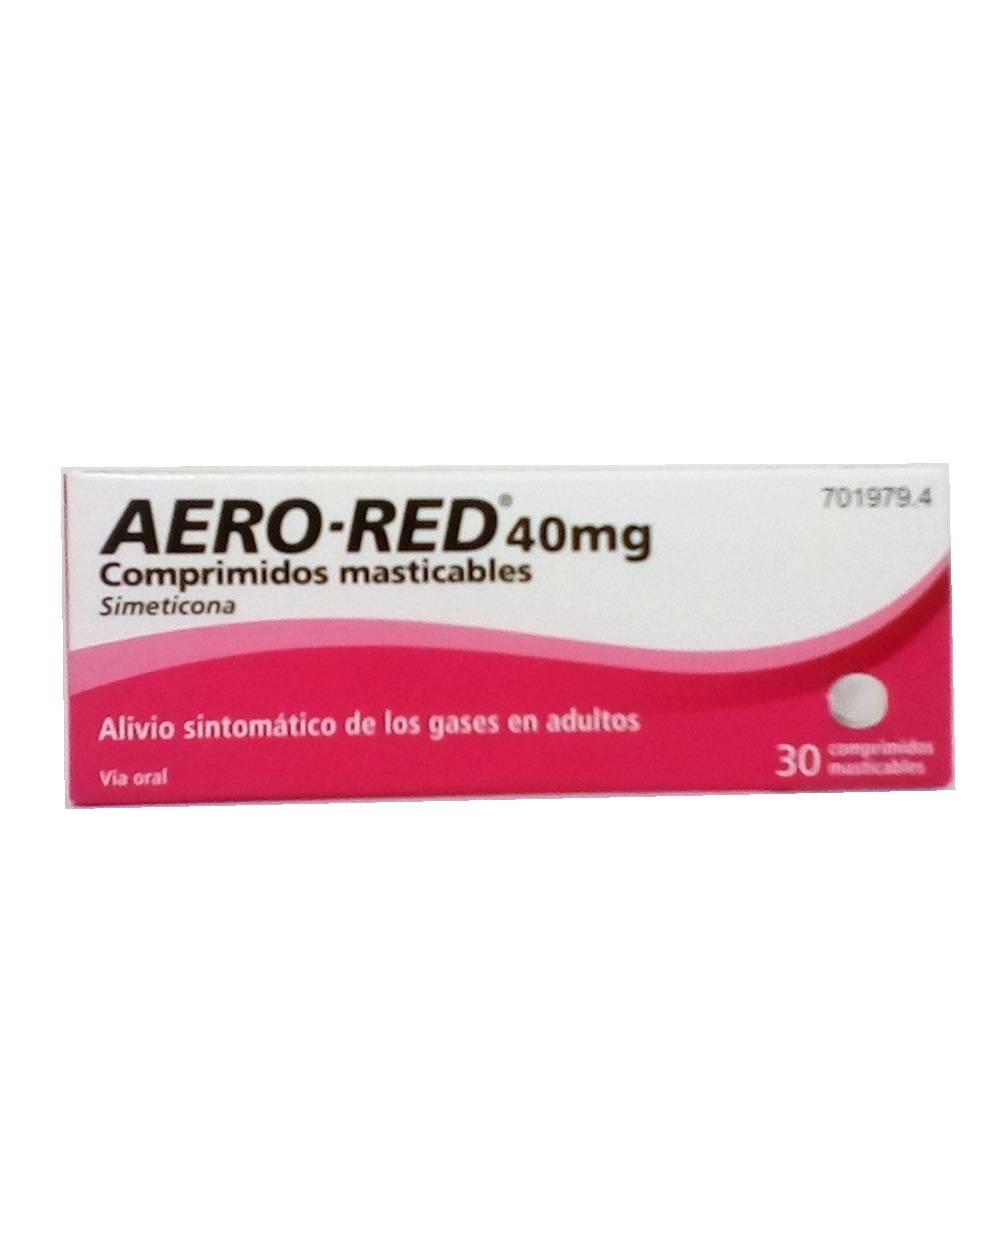 Aero-red - 40 mg - 30 comprimidos masticables n